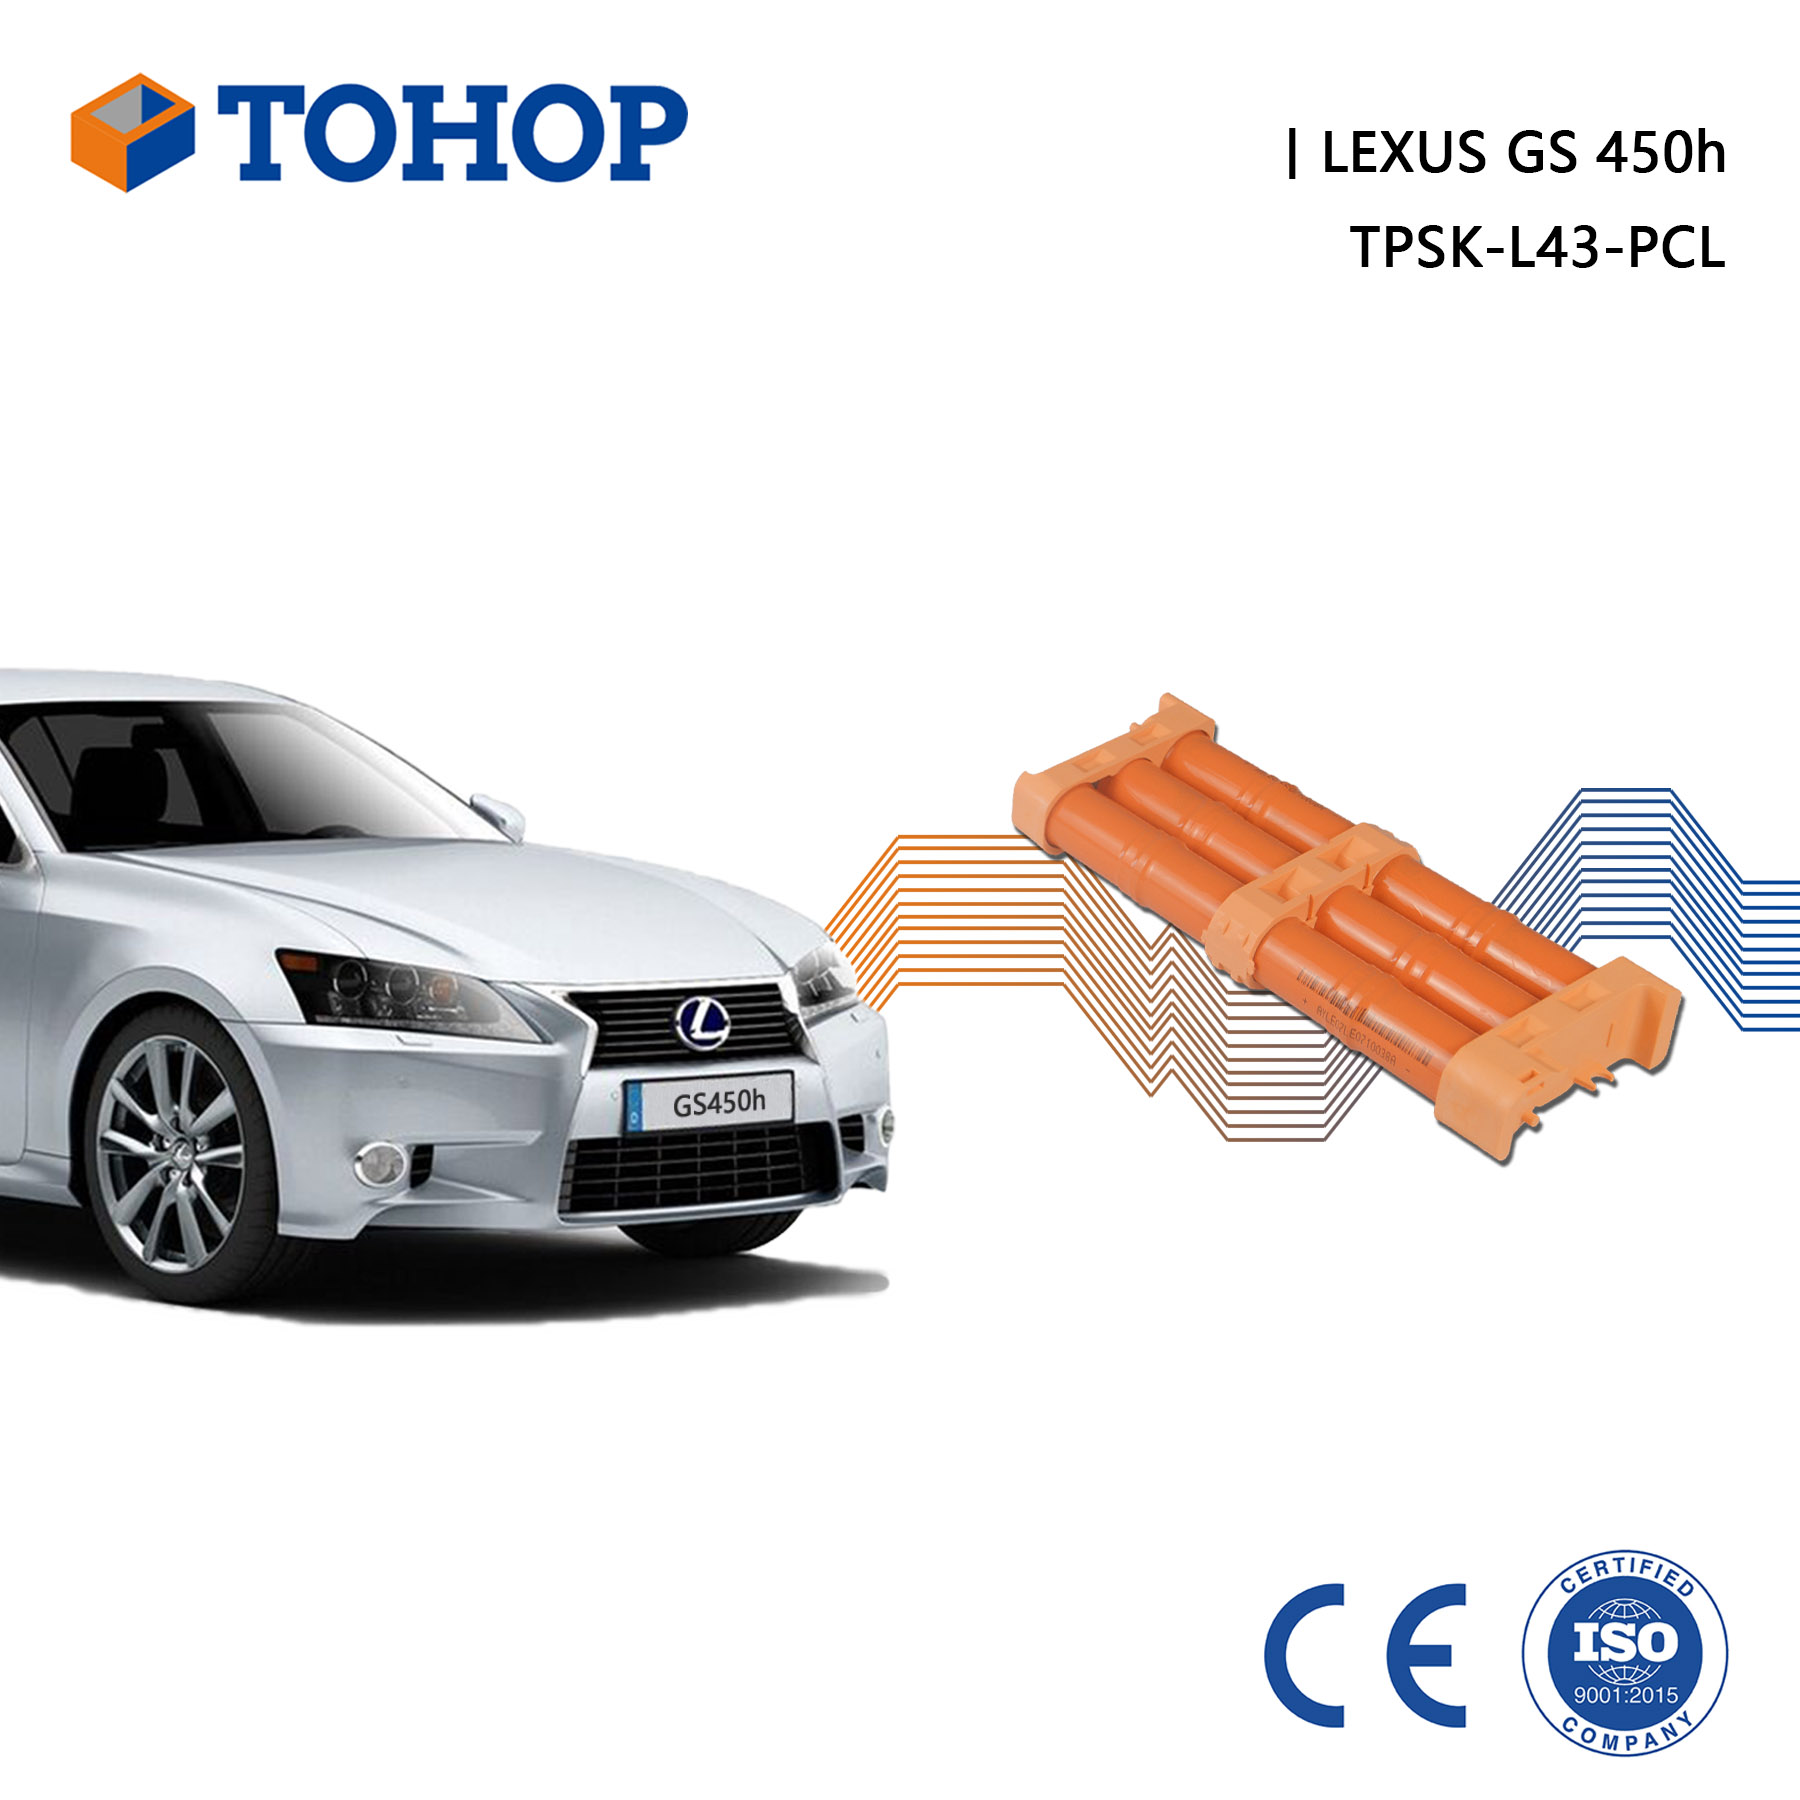 GS450h Cylindrical Brand New 6.5Ah Hybrid Car Battery Pack for Lexus